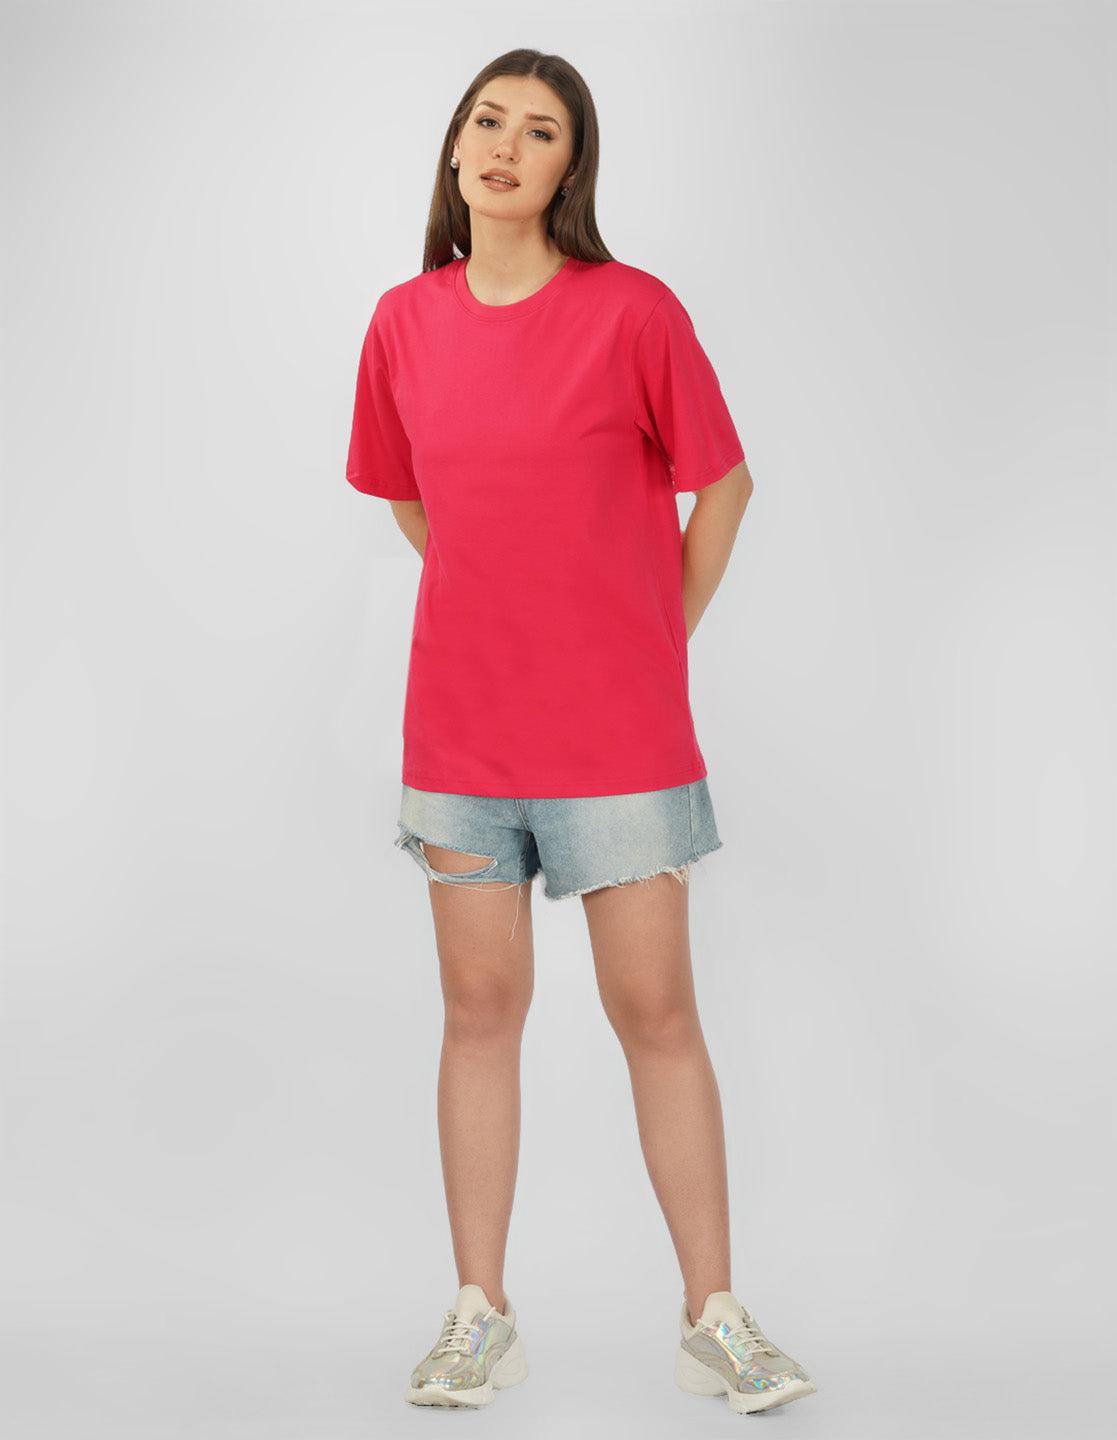 Nusyl Women Hot Pink Rainbow pint oversized t-shirt